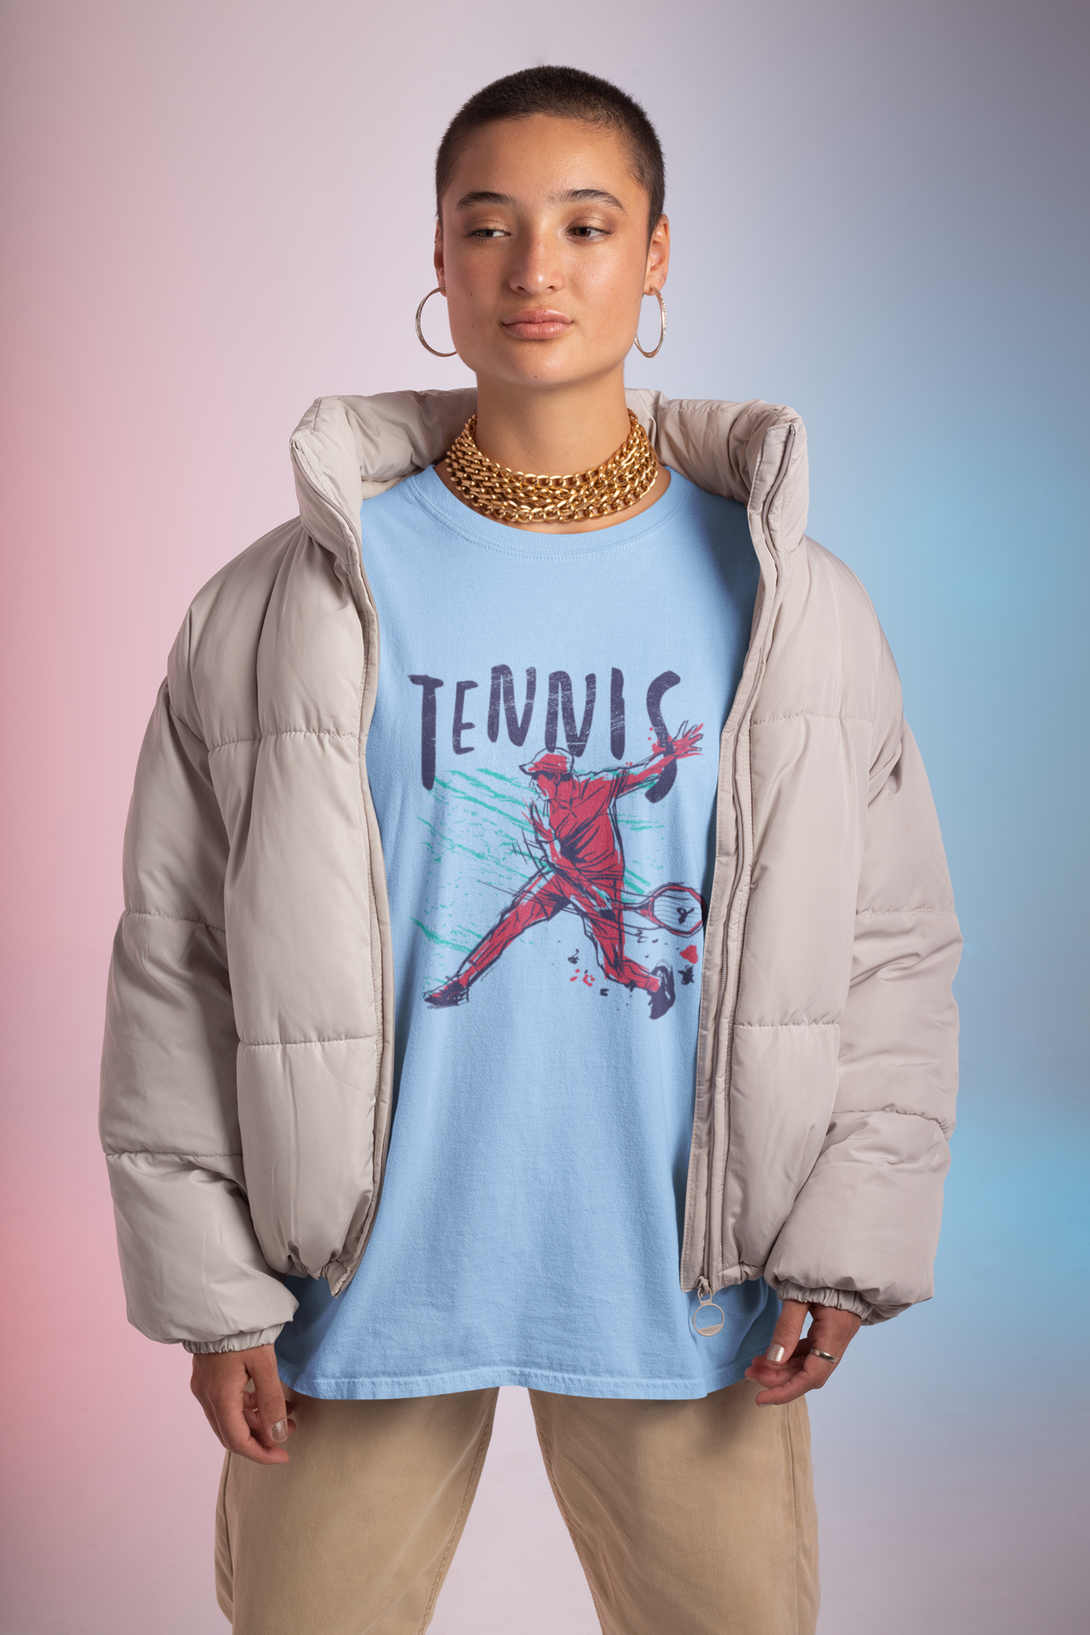 Tennis Printed Oversized T-Shirt For Women - WowWaves - 6